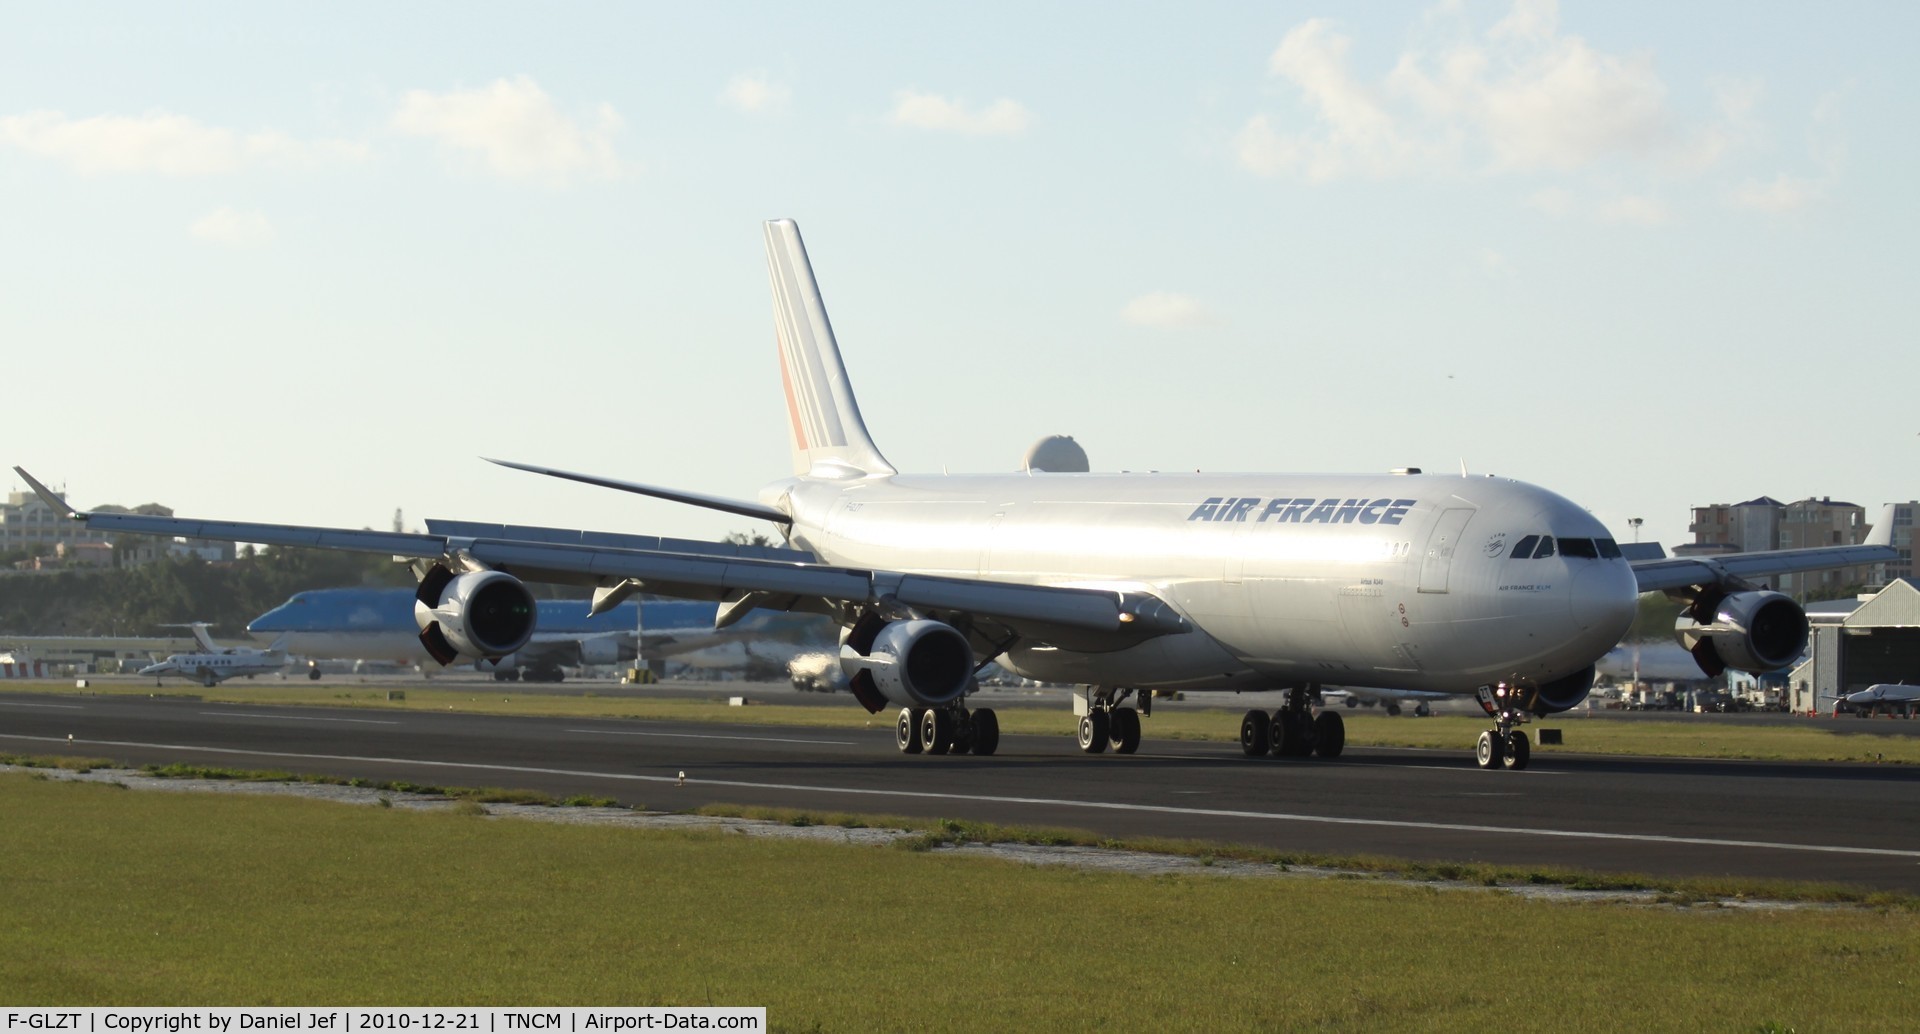 F-GLZT, 2000 Airbus A340-313X C/N 319, Air france landing at TNCM